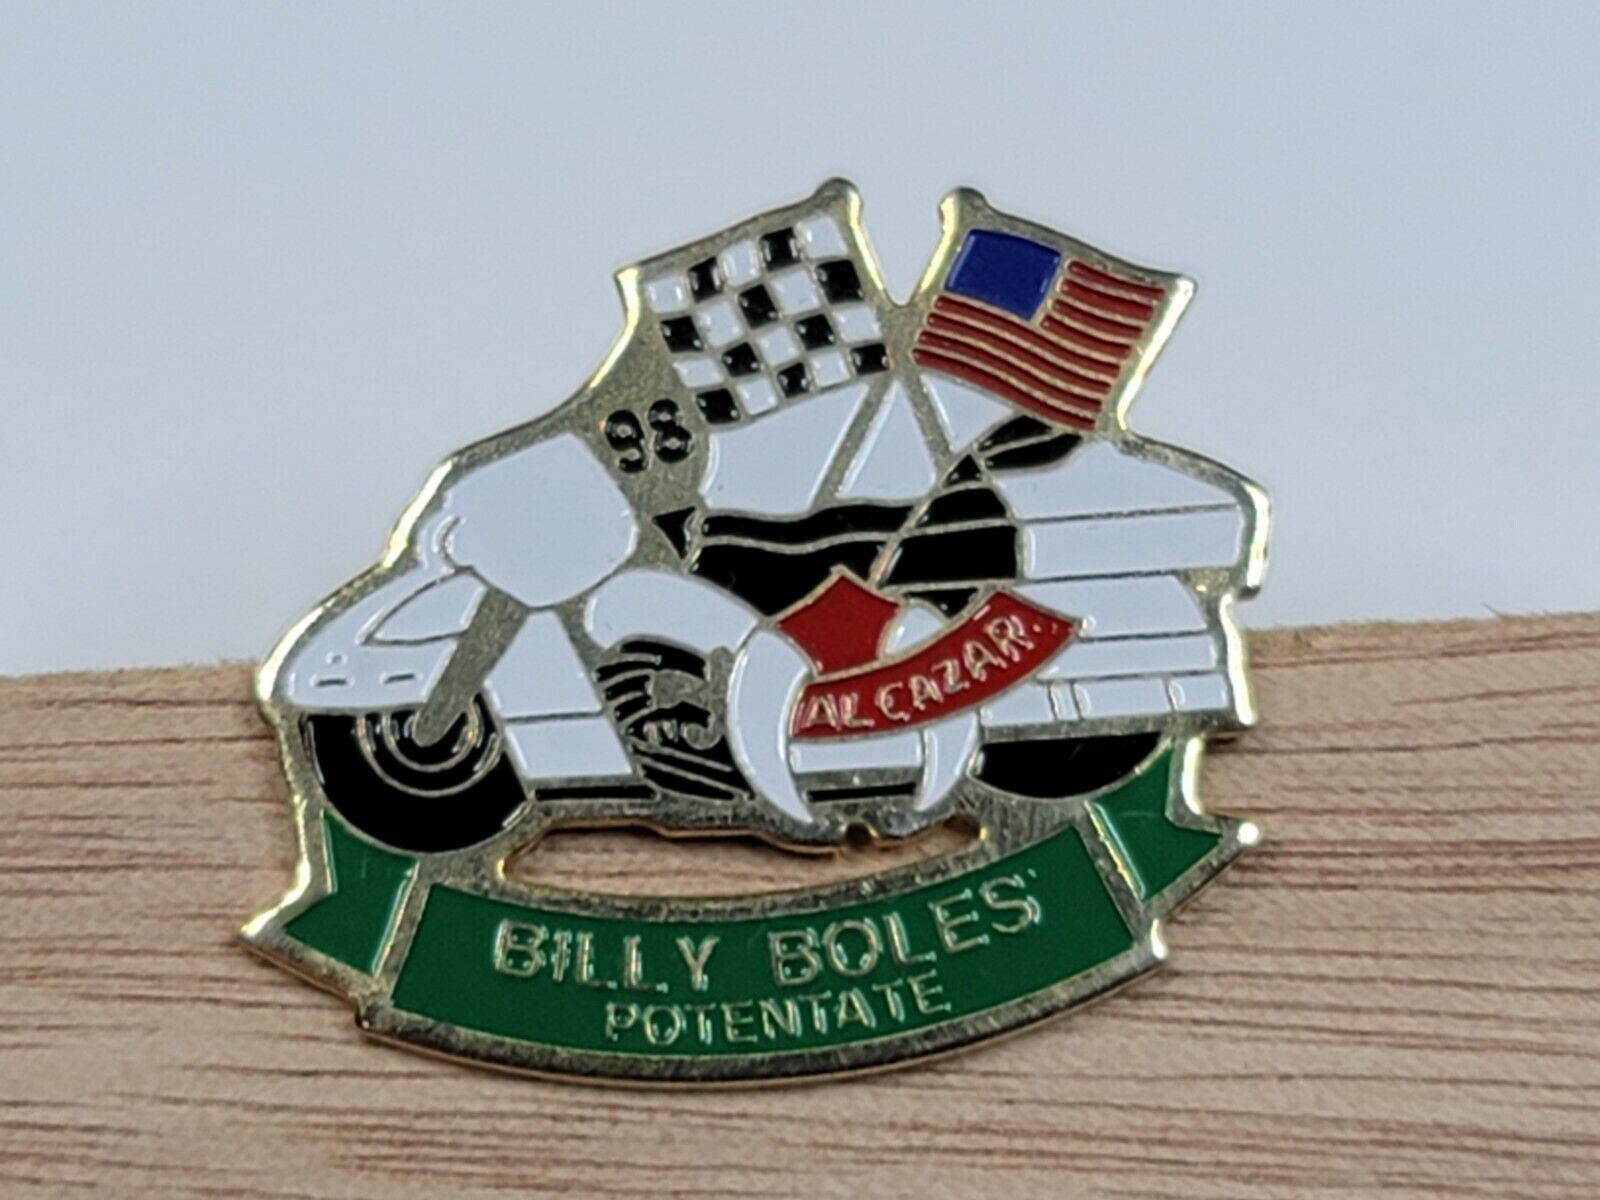 1998 Al Cazar Billy Boles Potentate Lapel Pin